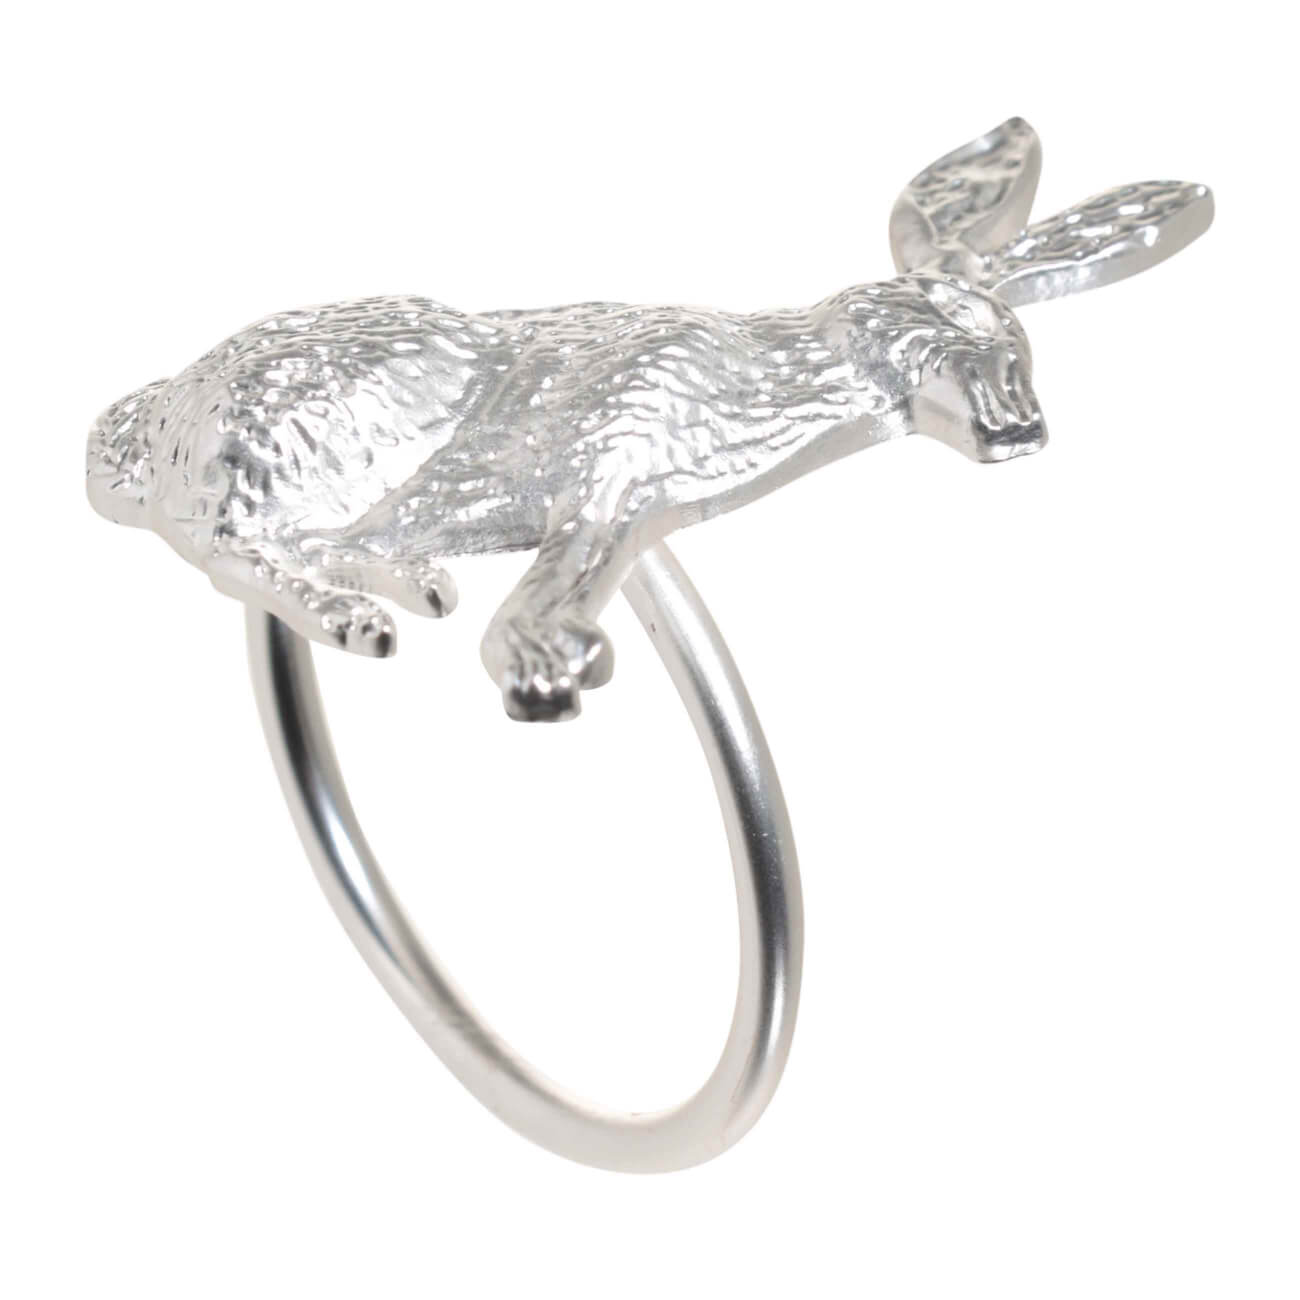 Кольцо для салфеток, 5 см, металл, серебристое, Кролик, Pure Easter кольцо для салфетки